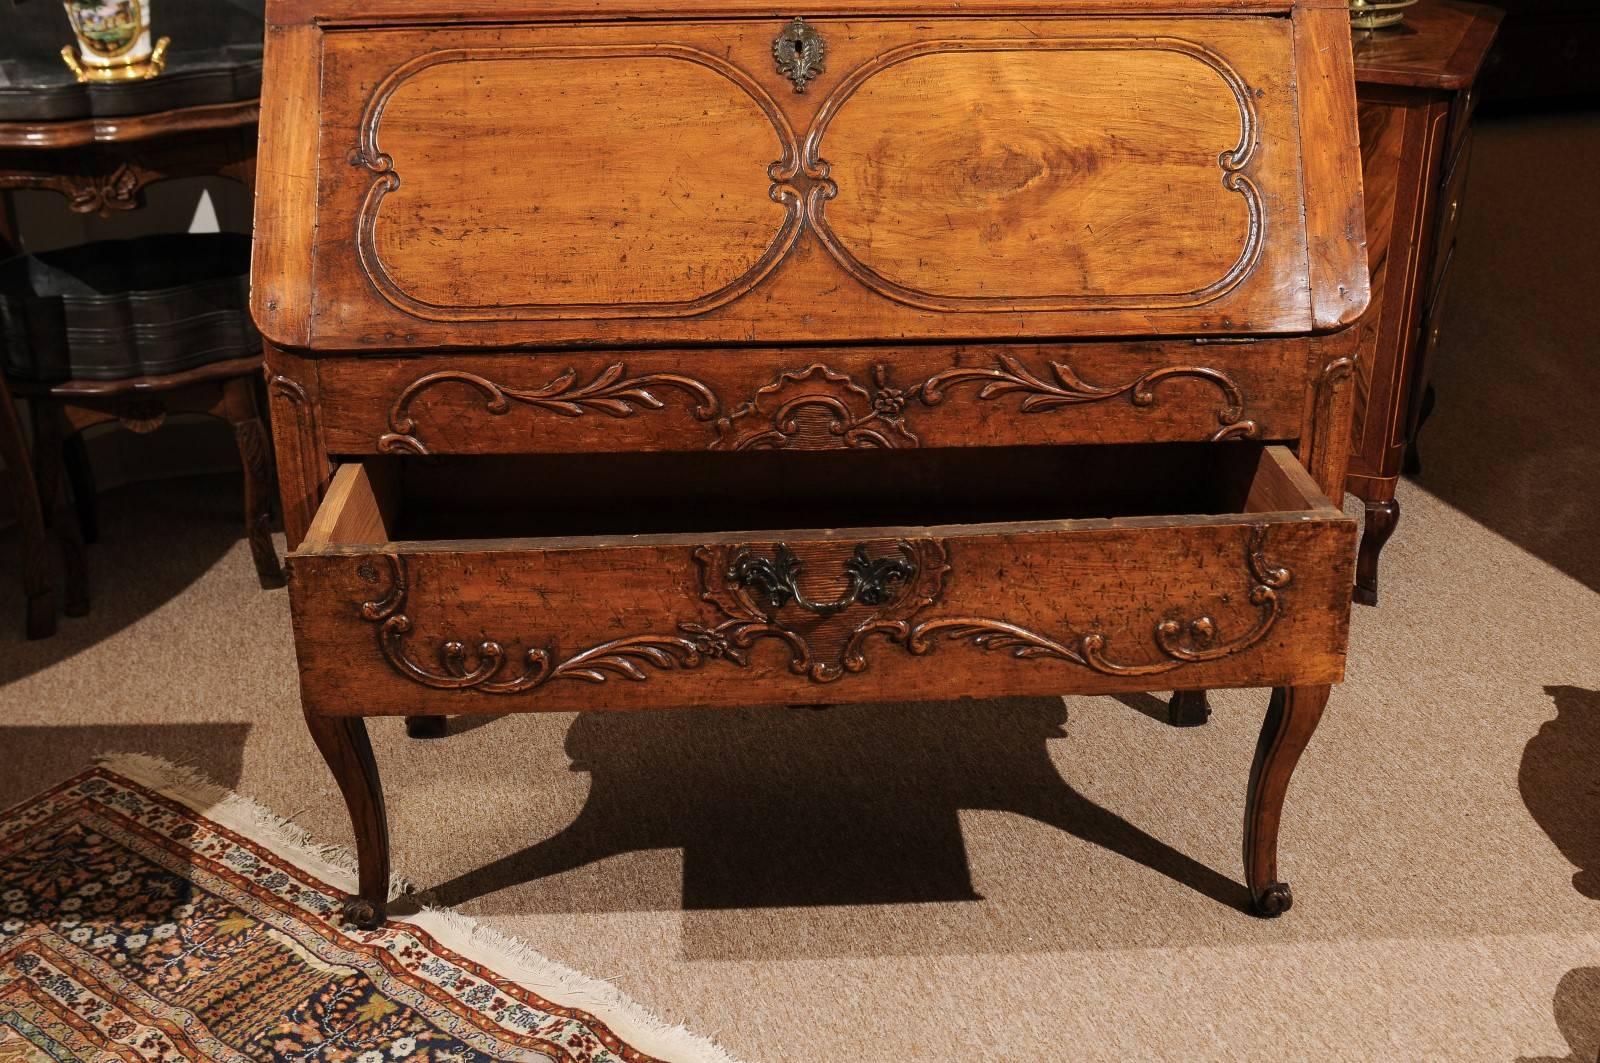 French Fruitwood Regence Bureau Slant Front Desk, Early 18th Century For Sale 2